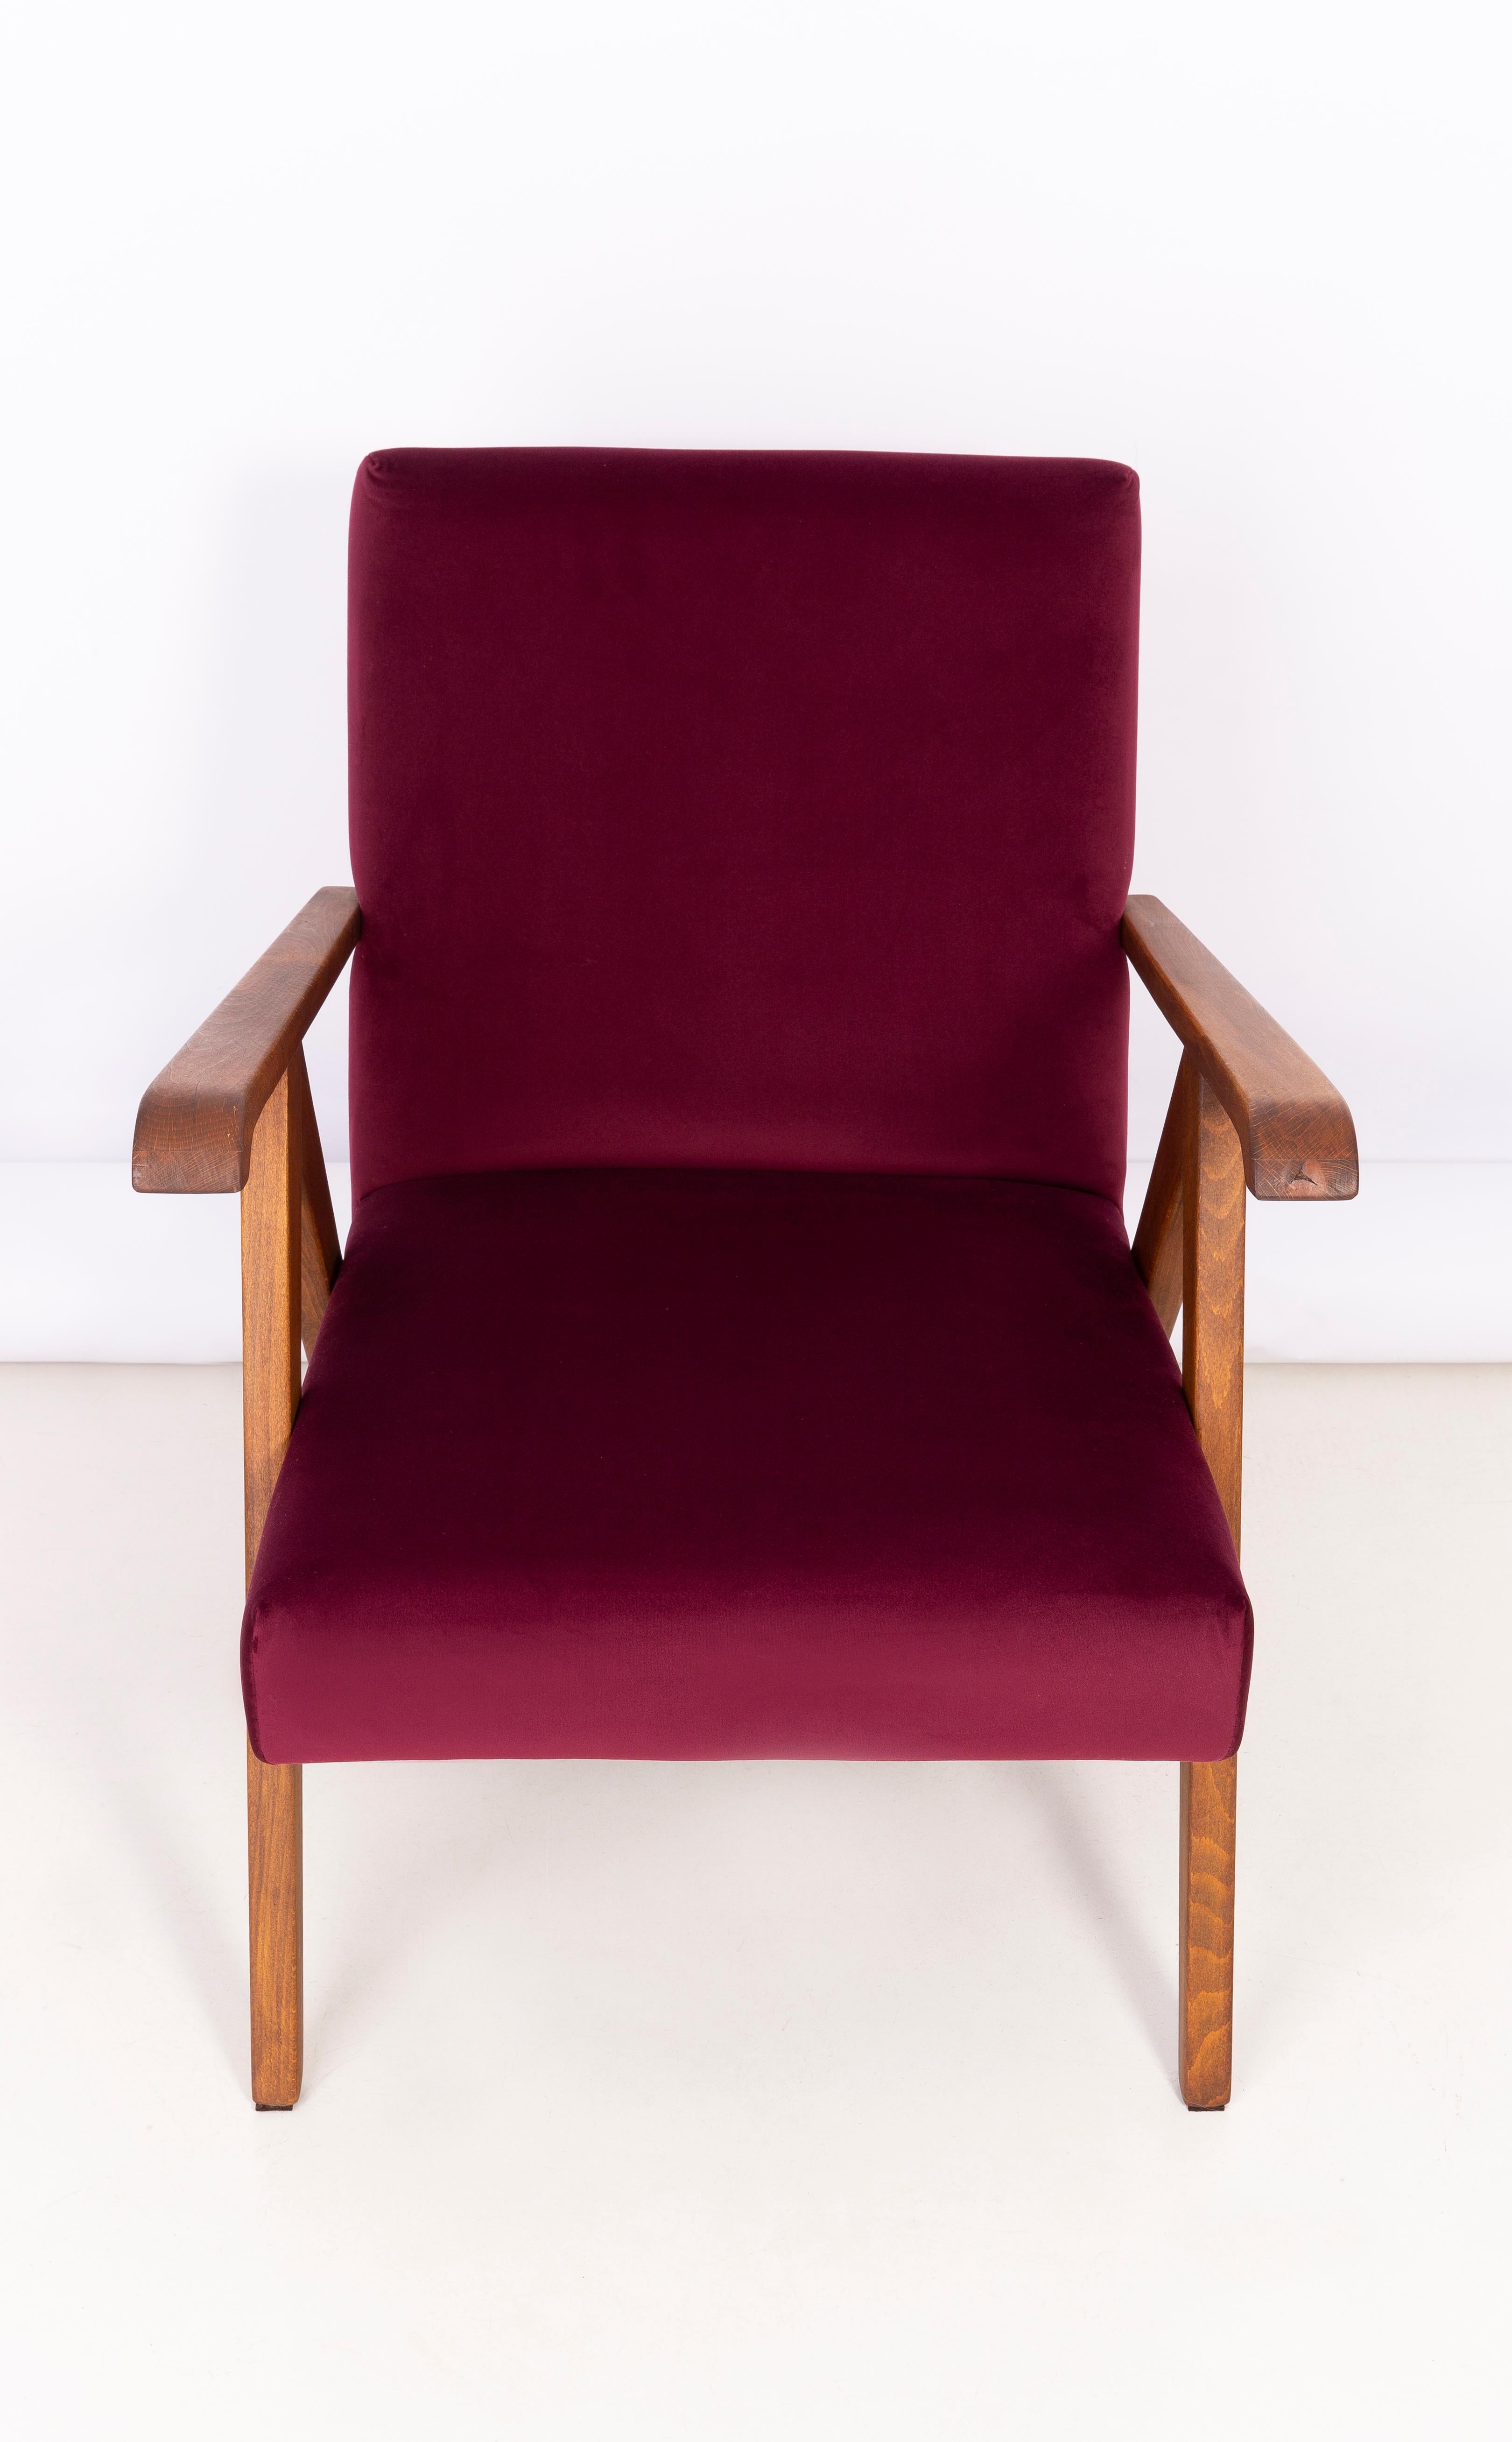 Burgunderfarbener VAR-Sessel aus der Mitte des Jahrhunderts, 1960er Jahre (Textil) im Angebot